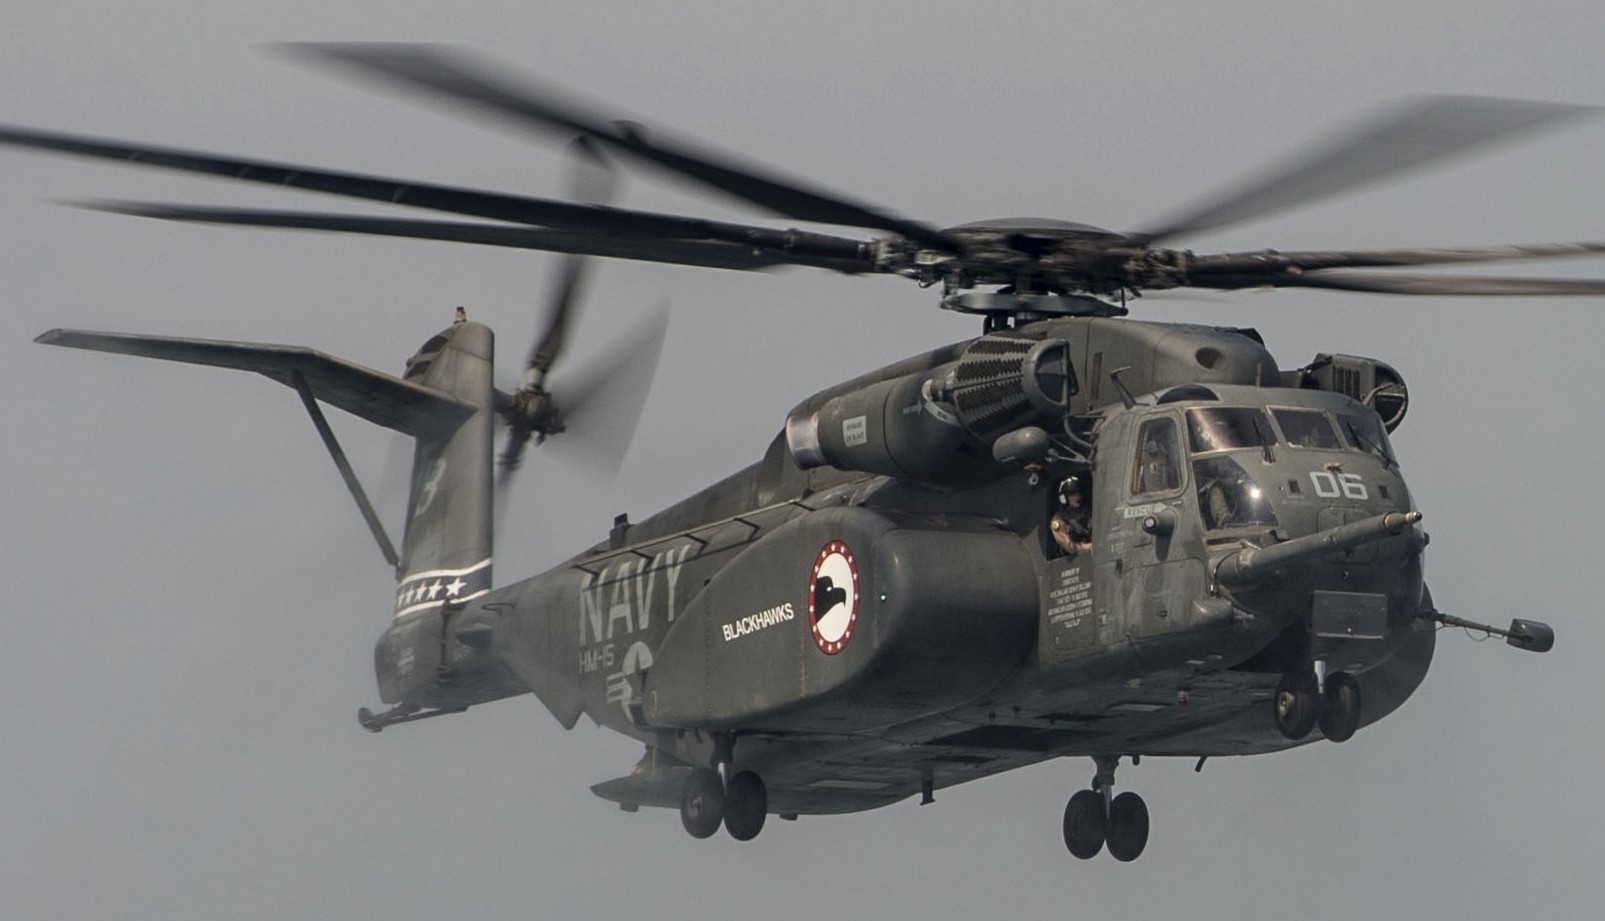 hm-15 blackhawks helicopter mine countermeasures squadron navy mh-53e sea dragon 36